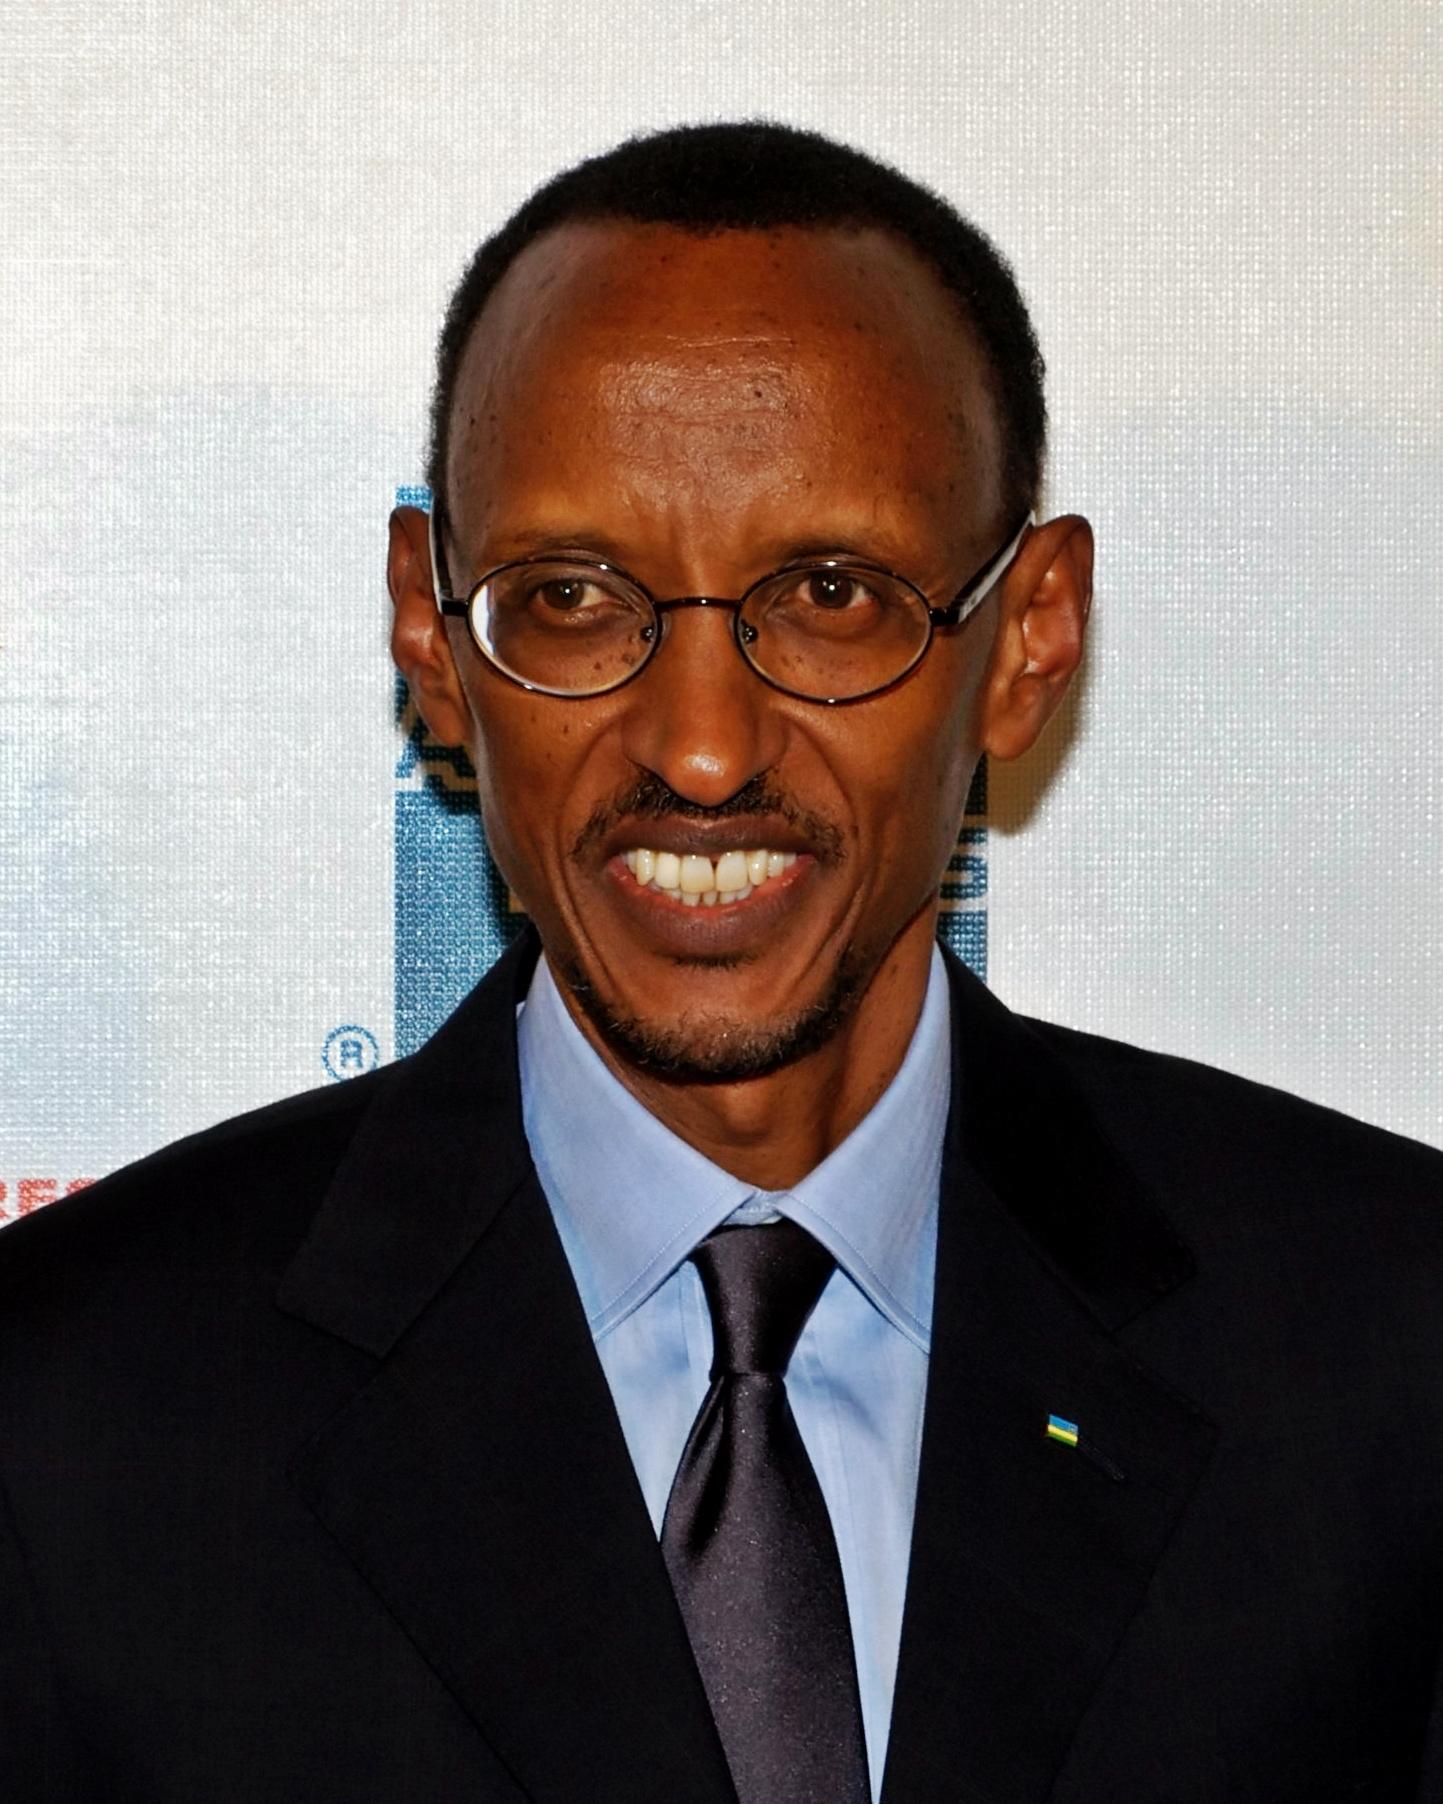 Happy birthday to the President of Rwanda Paul Kagame! 